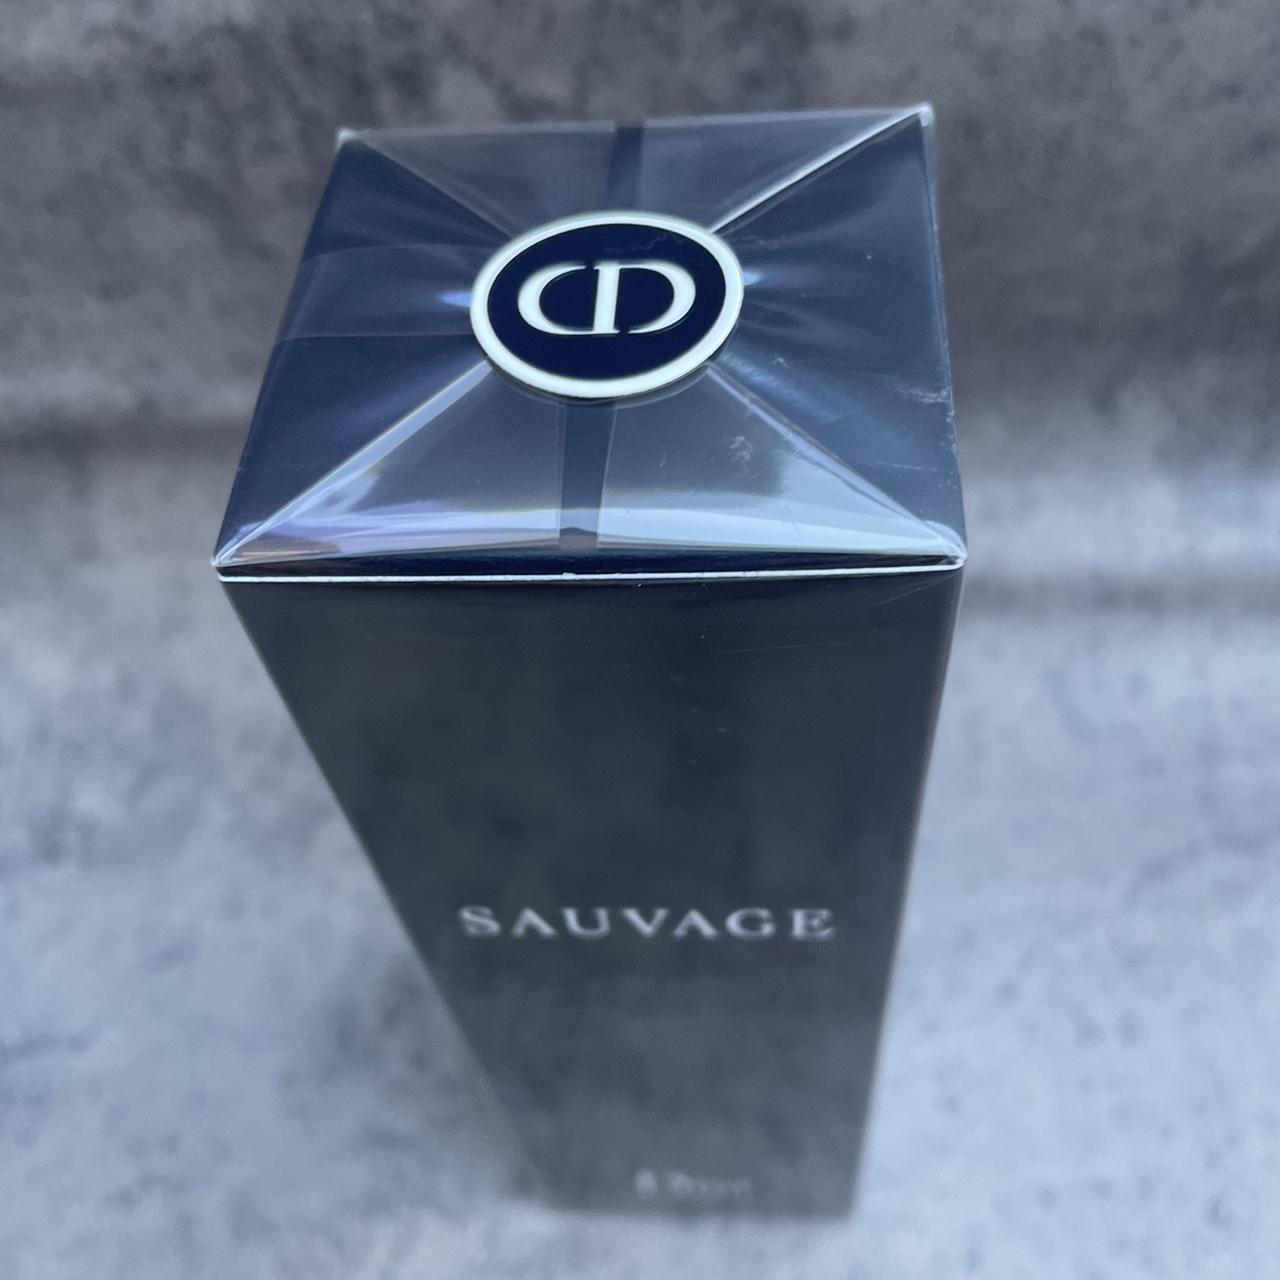 Dior SAUVAGE Deodorant spray 150ml New - Depop